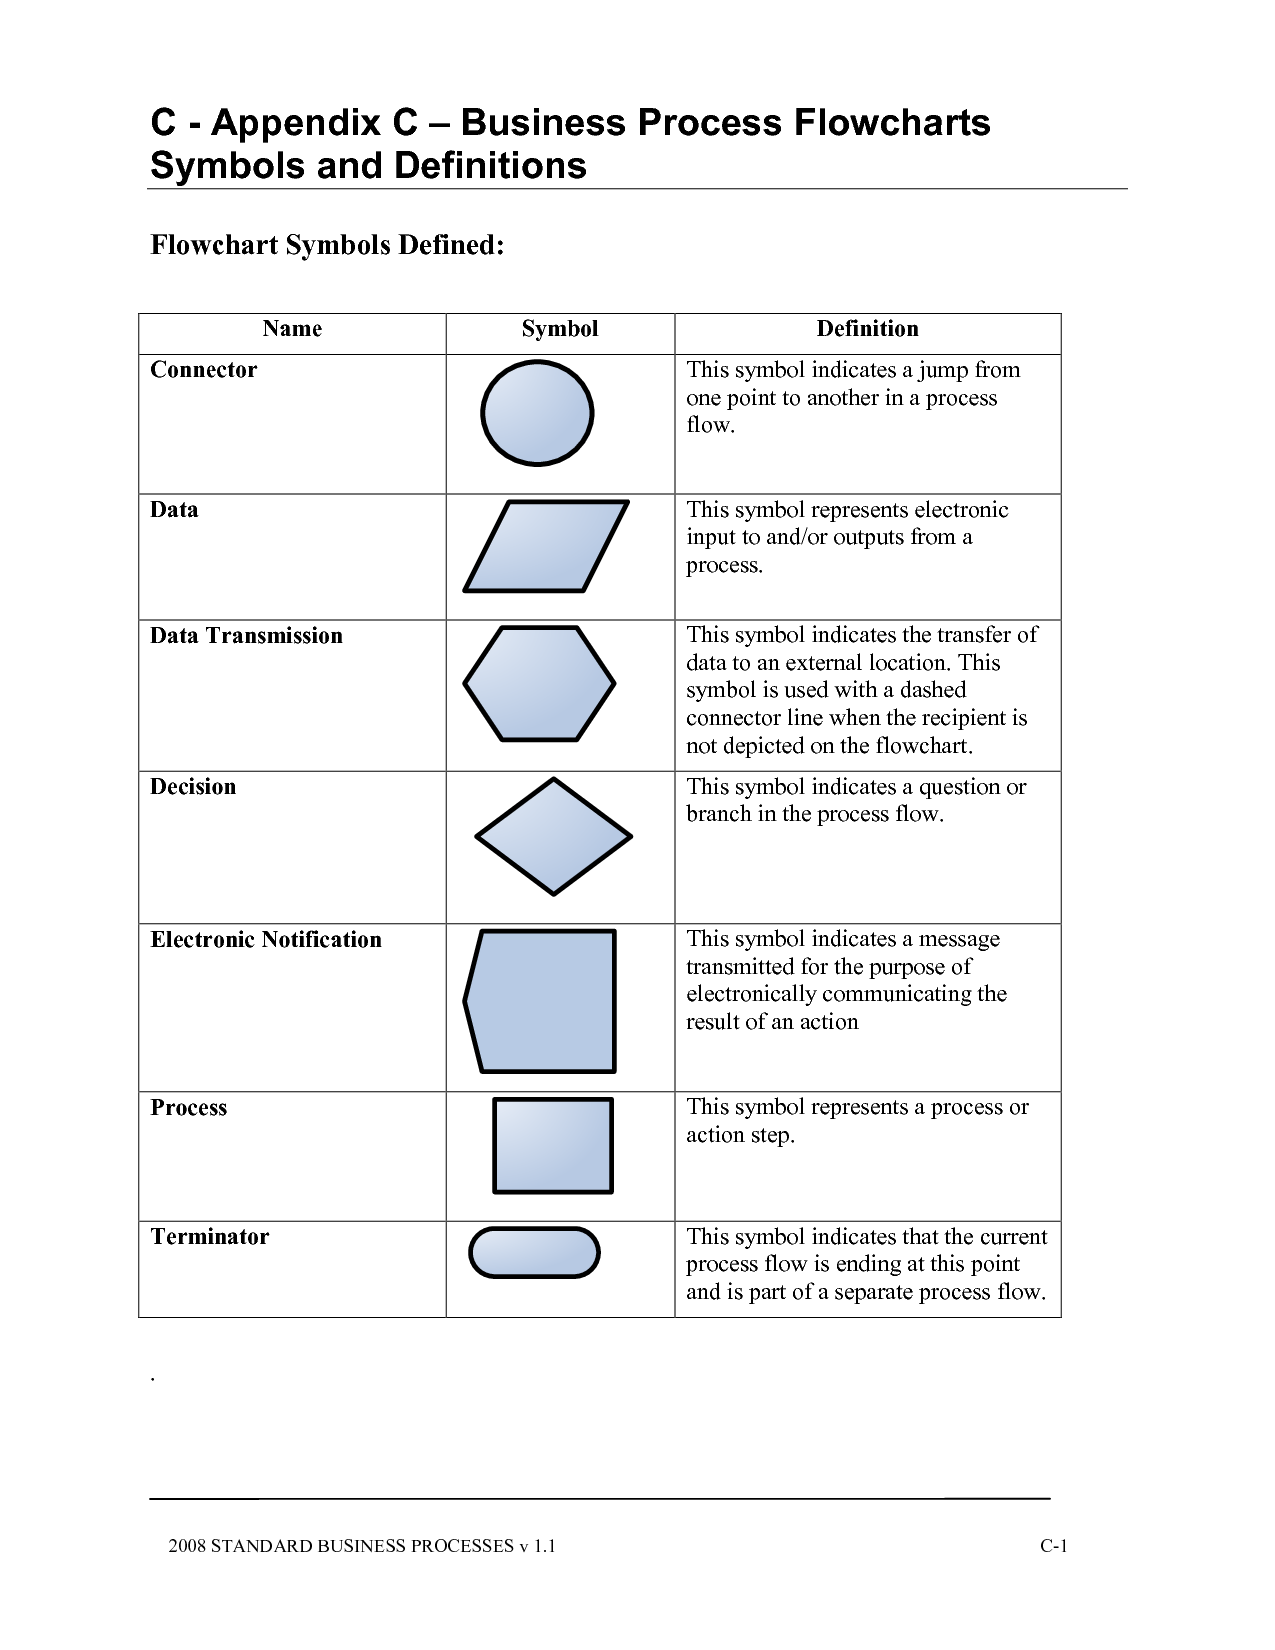 Process Flow Chart Symbol Definitions